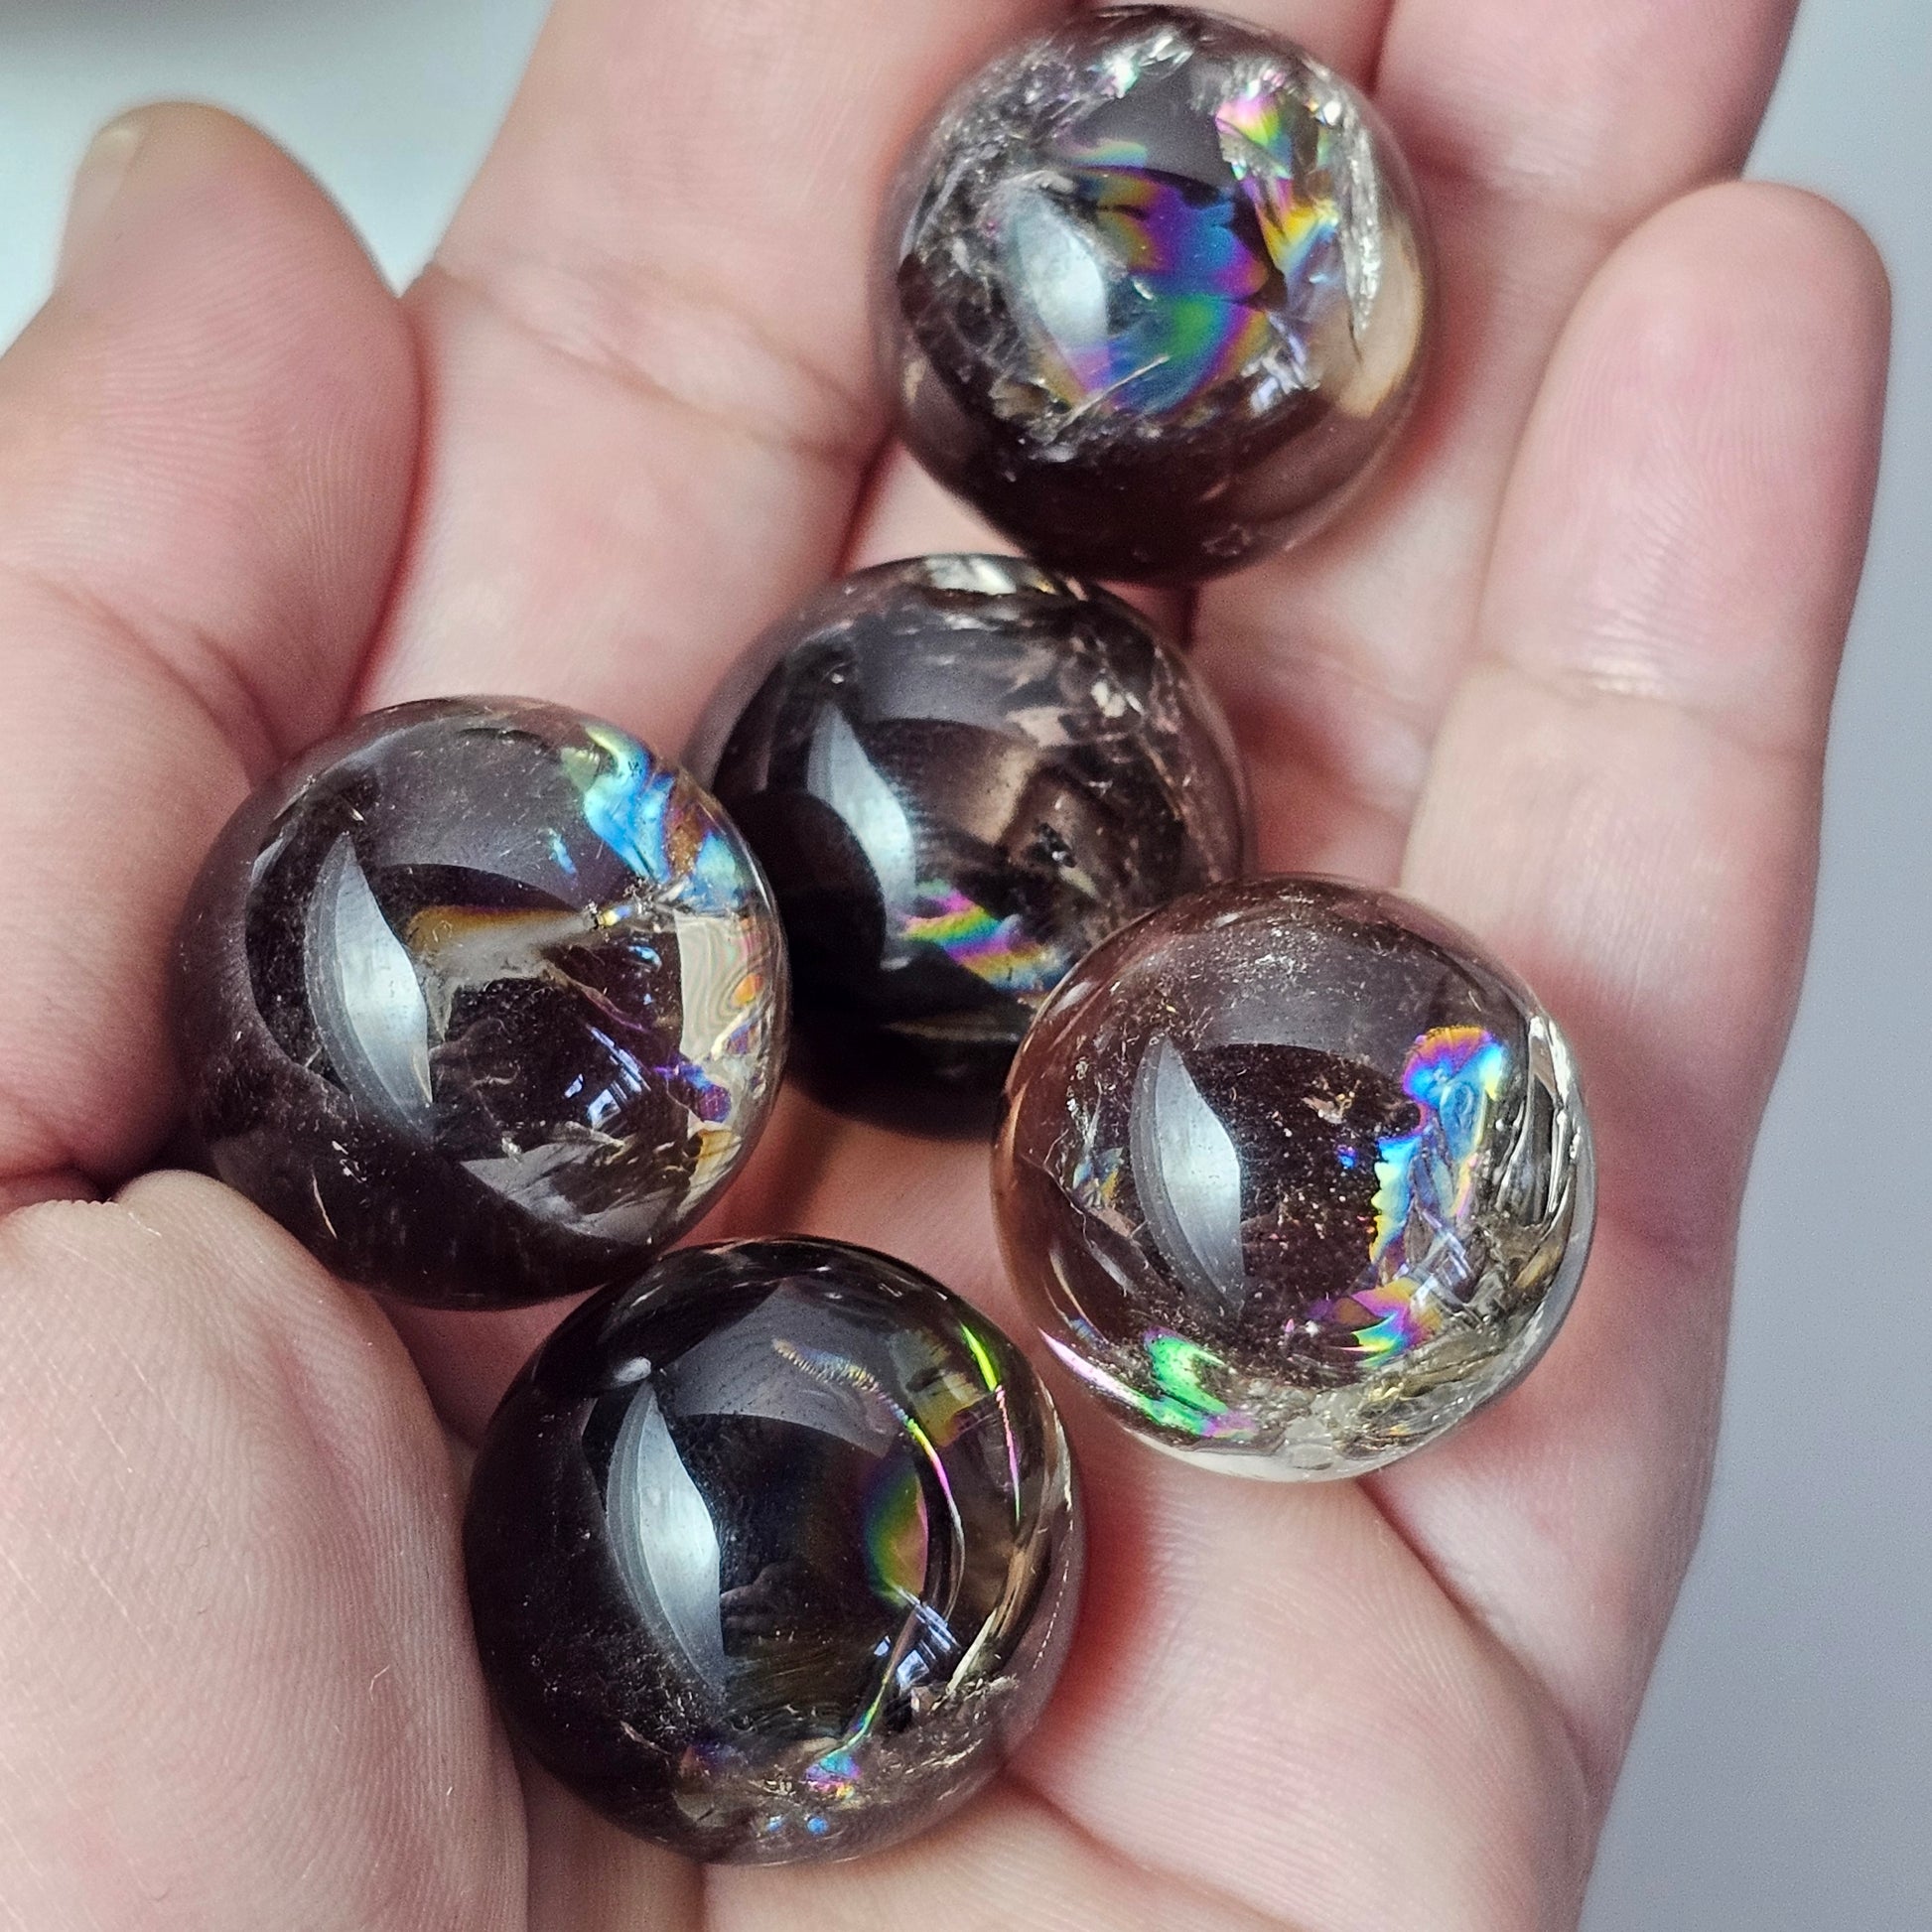 Small high quality Smoky Quartz spheres, all with spectacular rainbows. Origin: Brazil